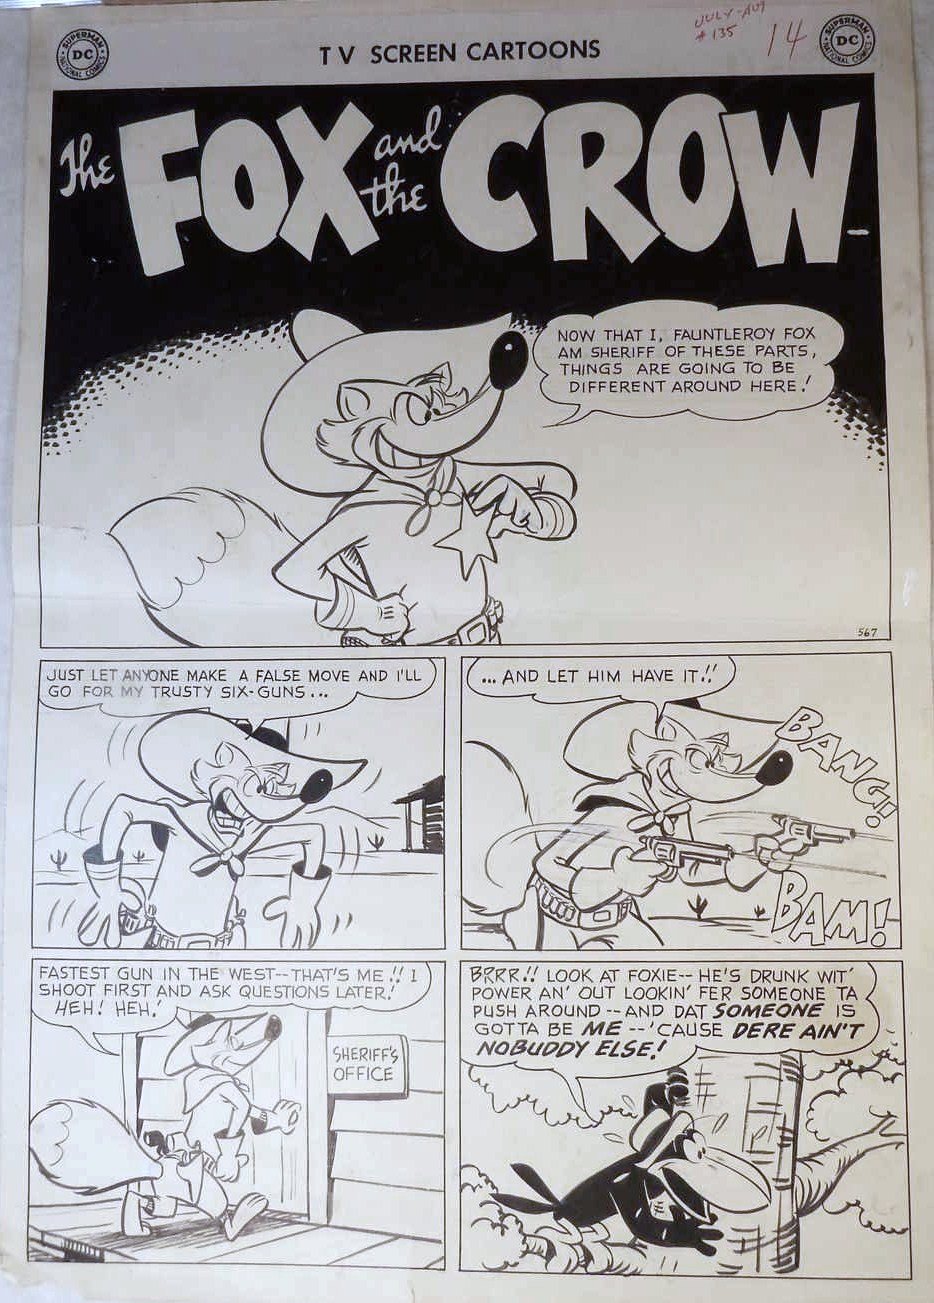 DAVIS, JAMES - DC TV Screen Cartoons #135 splash - Fox & Crow, Fauntleroy  Fox as sheriff 1960, in Stephen Donnelly's DAVIS, JAMES - DC Fox and Crow  Comic Art Gallery Room